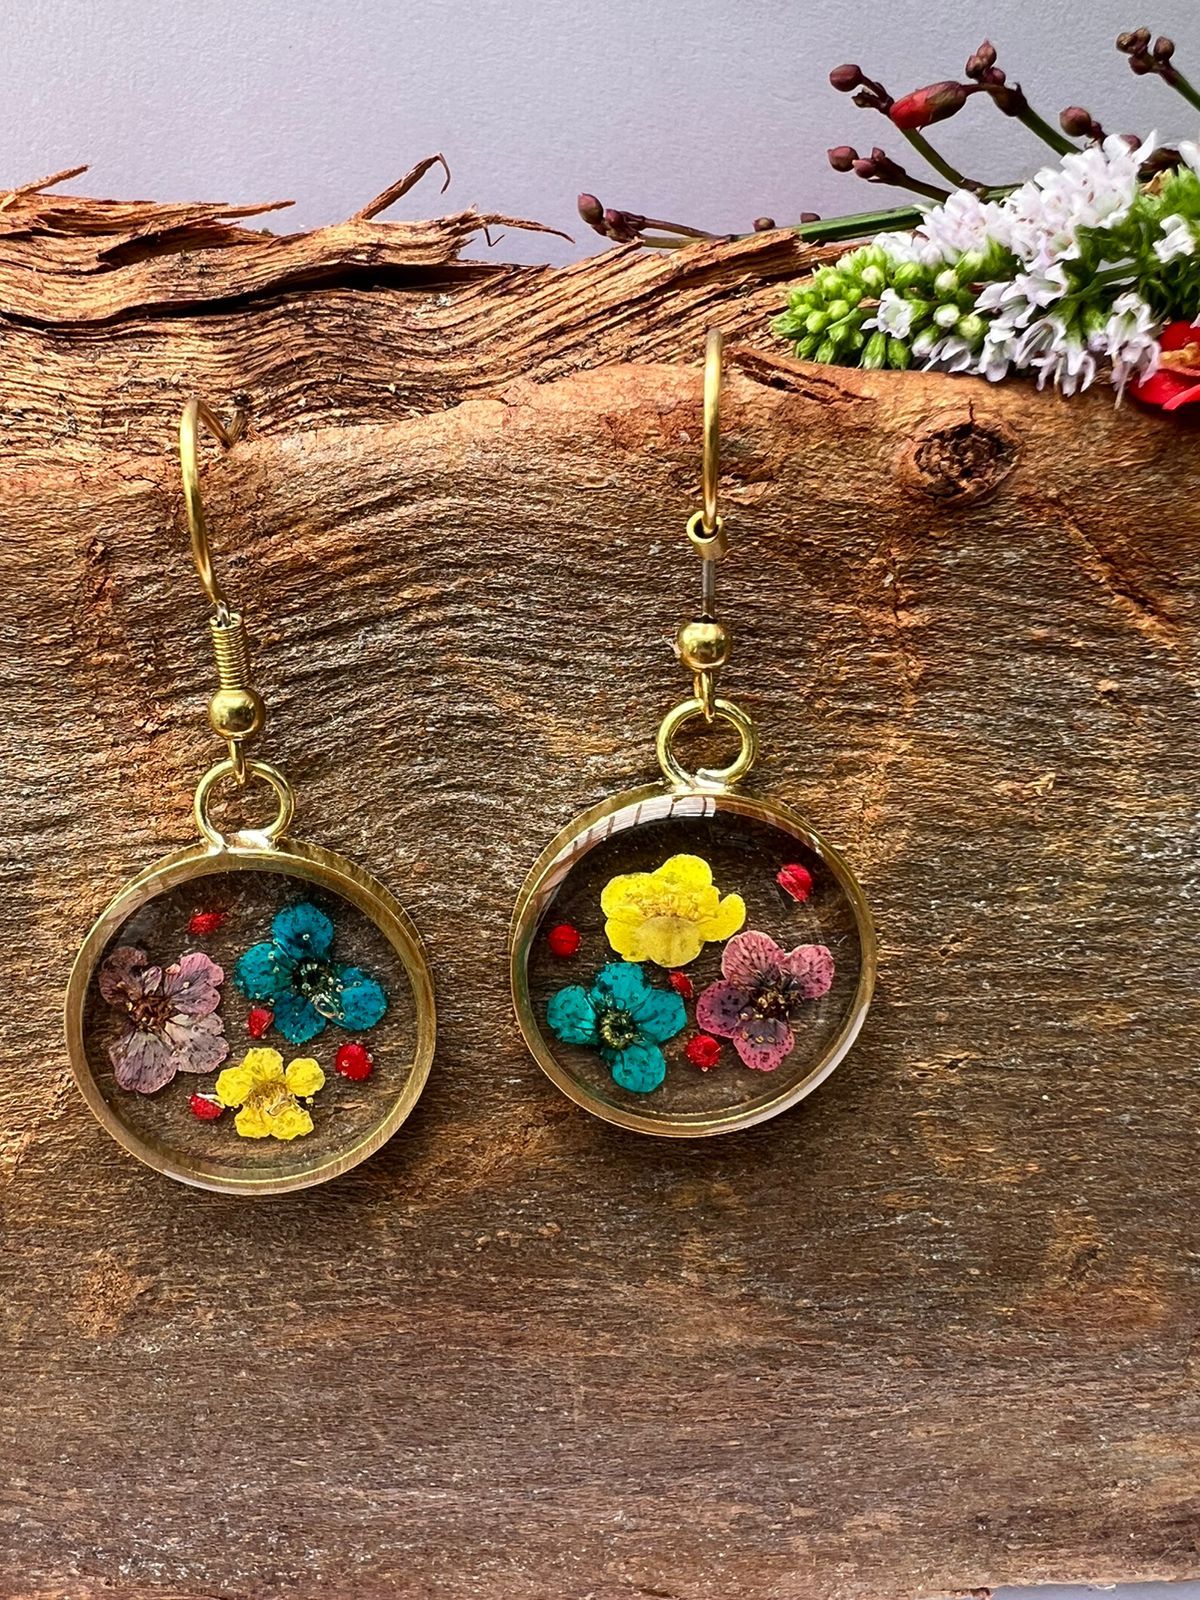 Summer Bouquet earrings necklace unisex gift